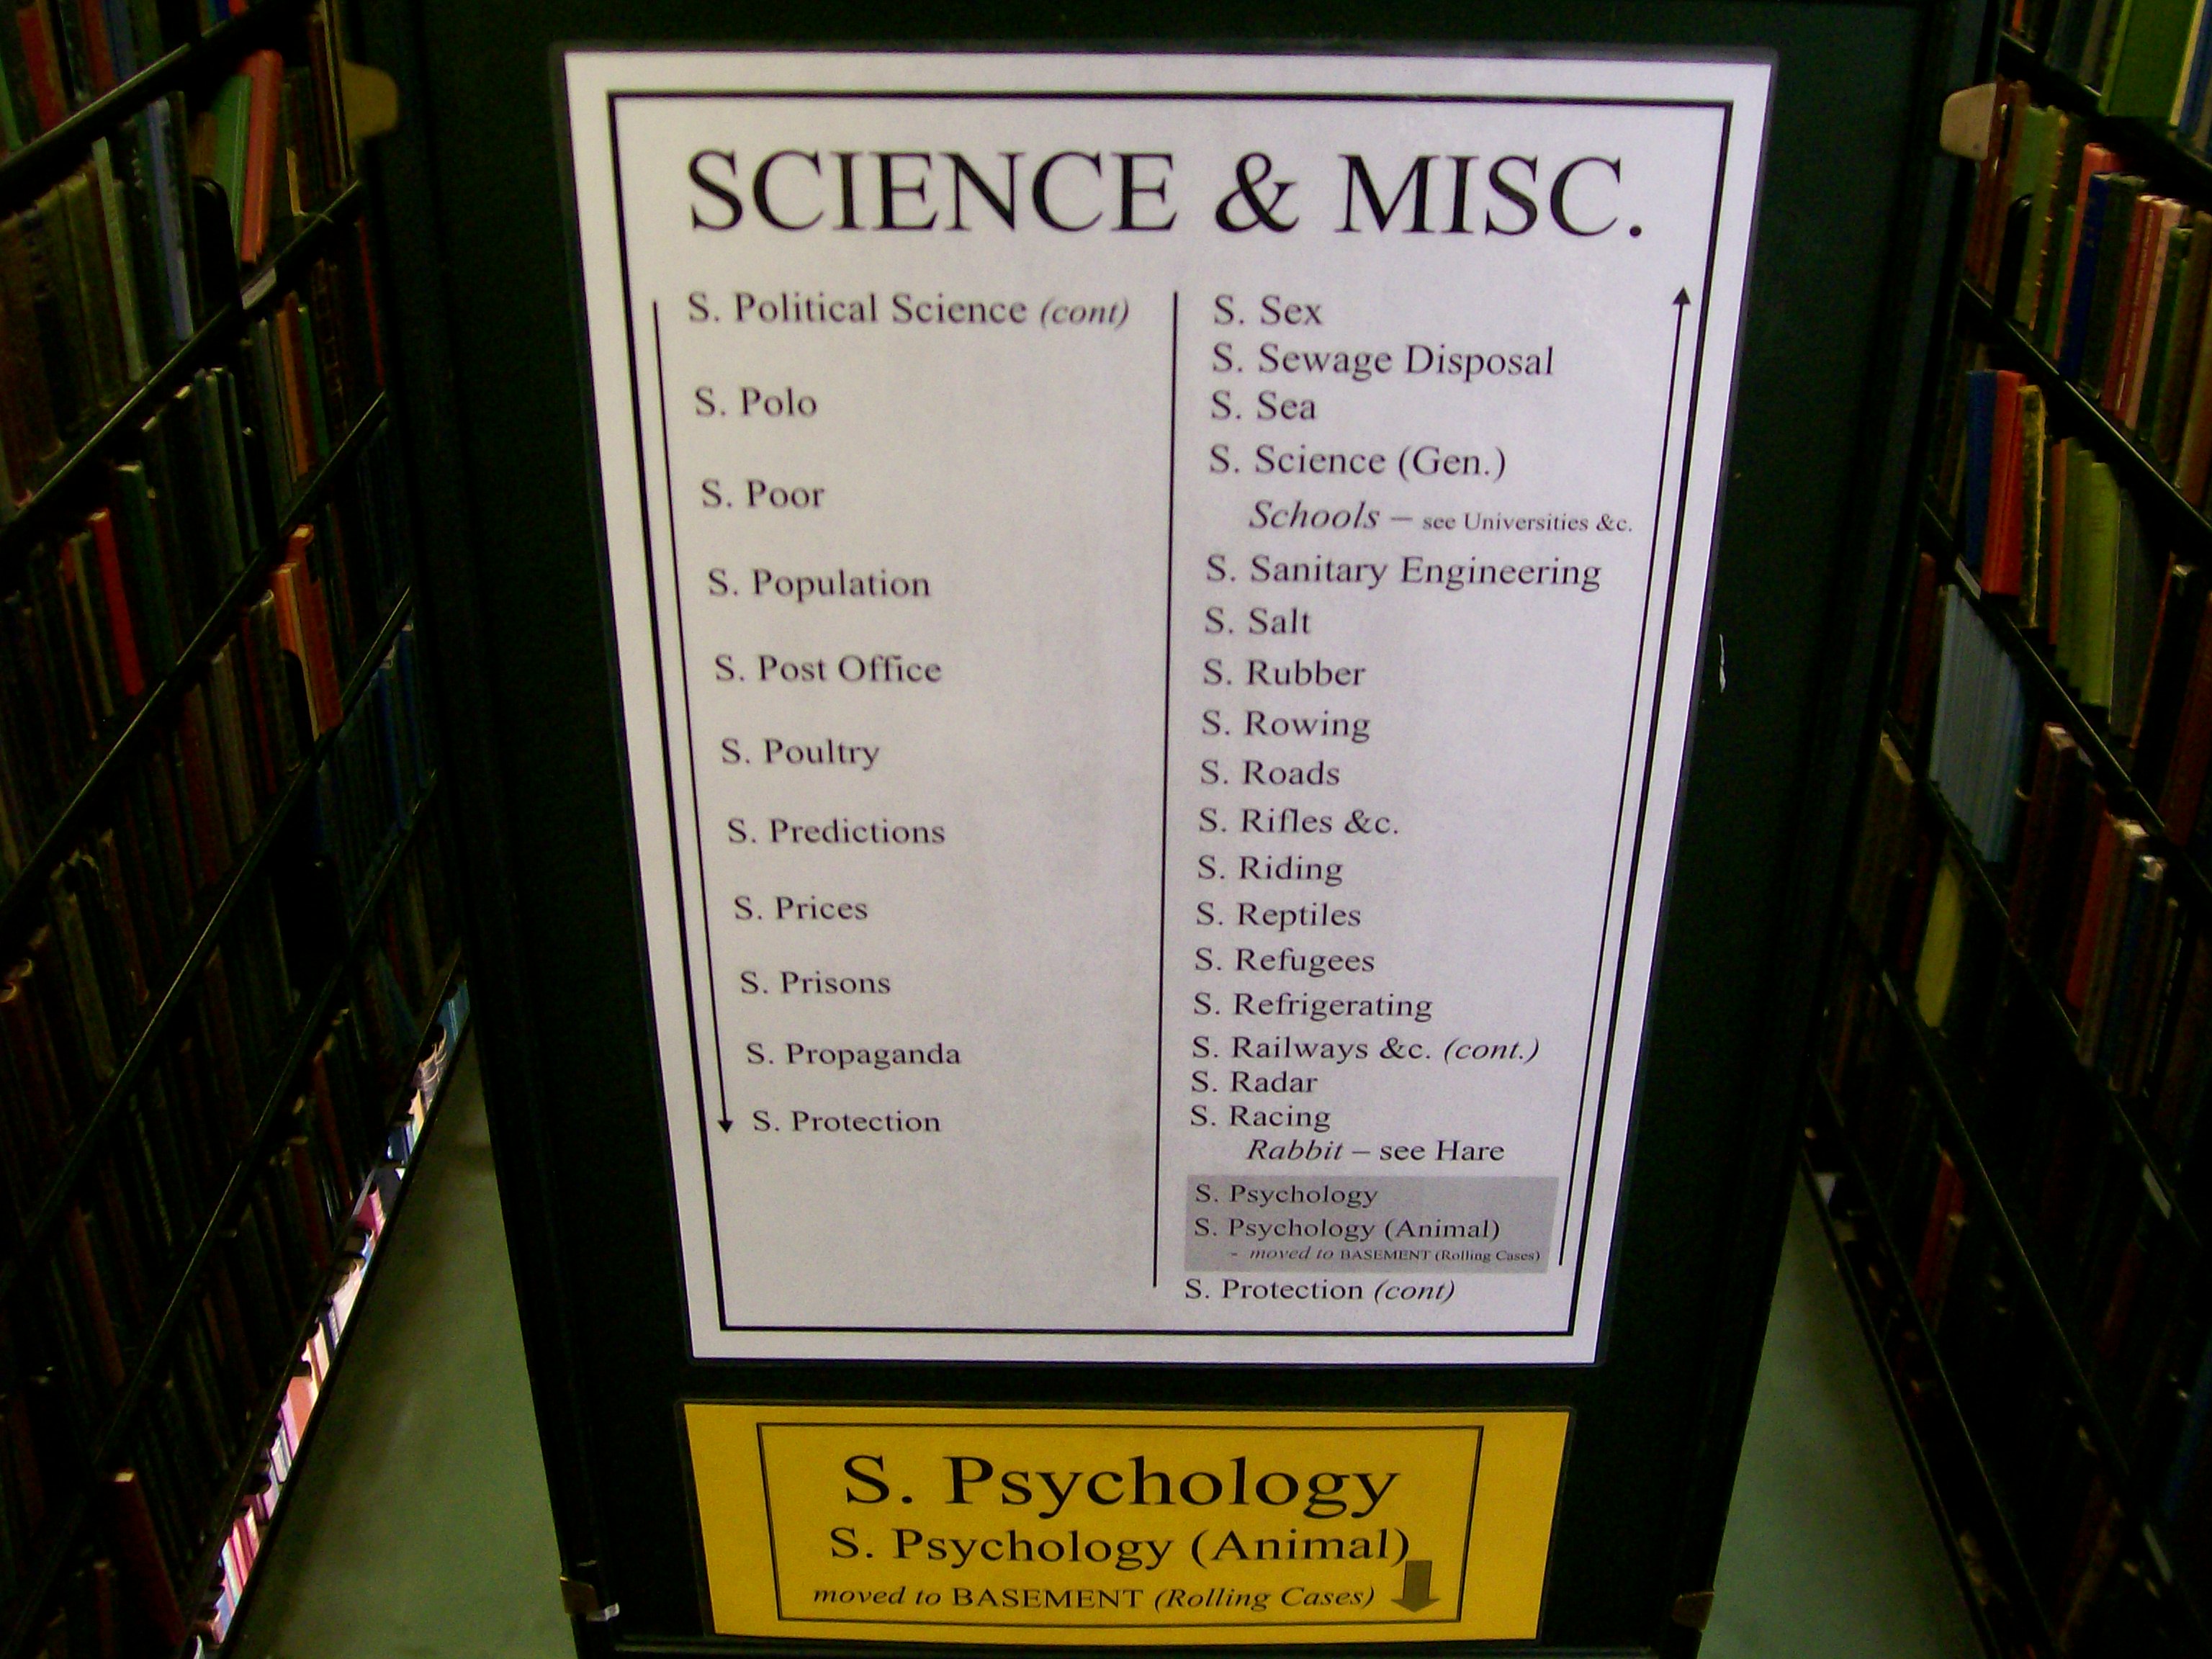 Science & Misc subject headings